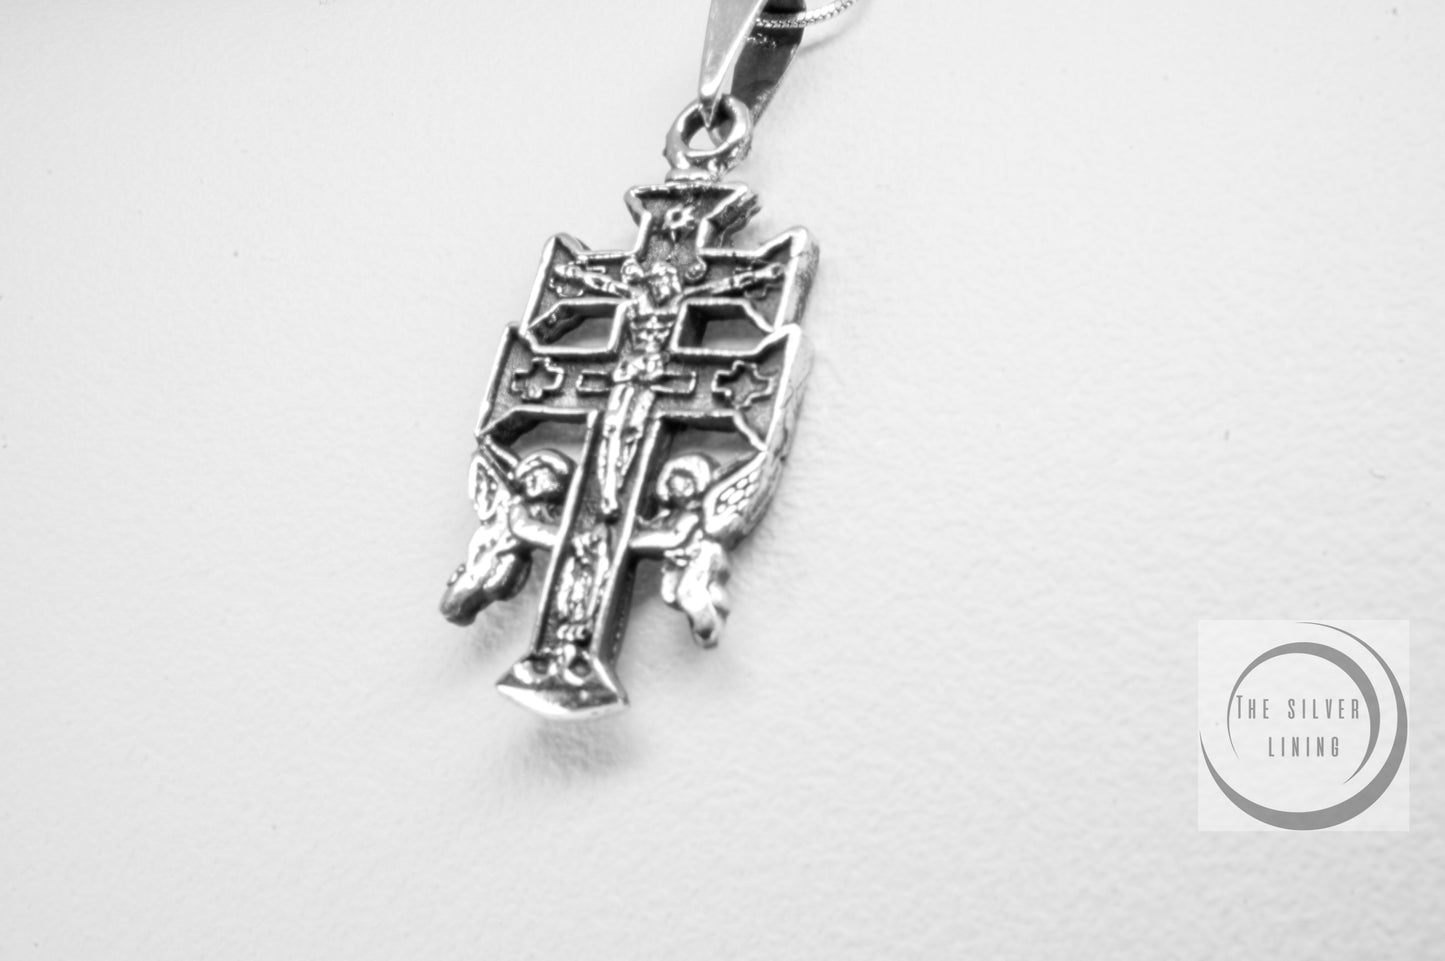 Dije de plata 925, Cruz de Caravaca mediana con cadena incluída